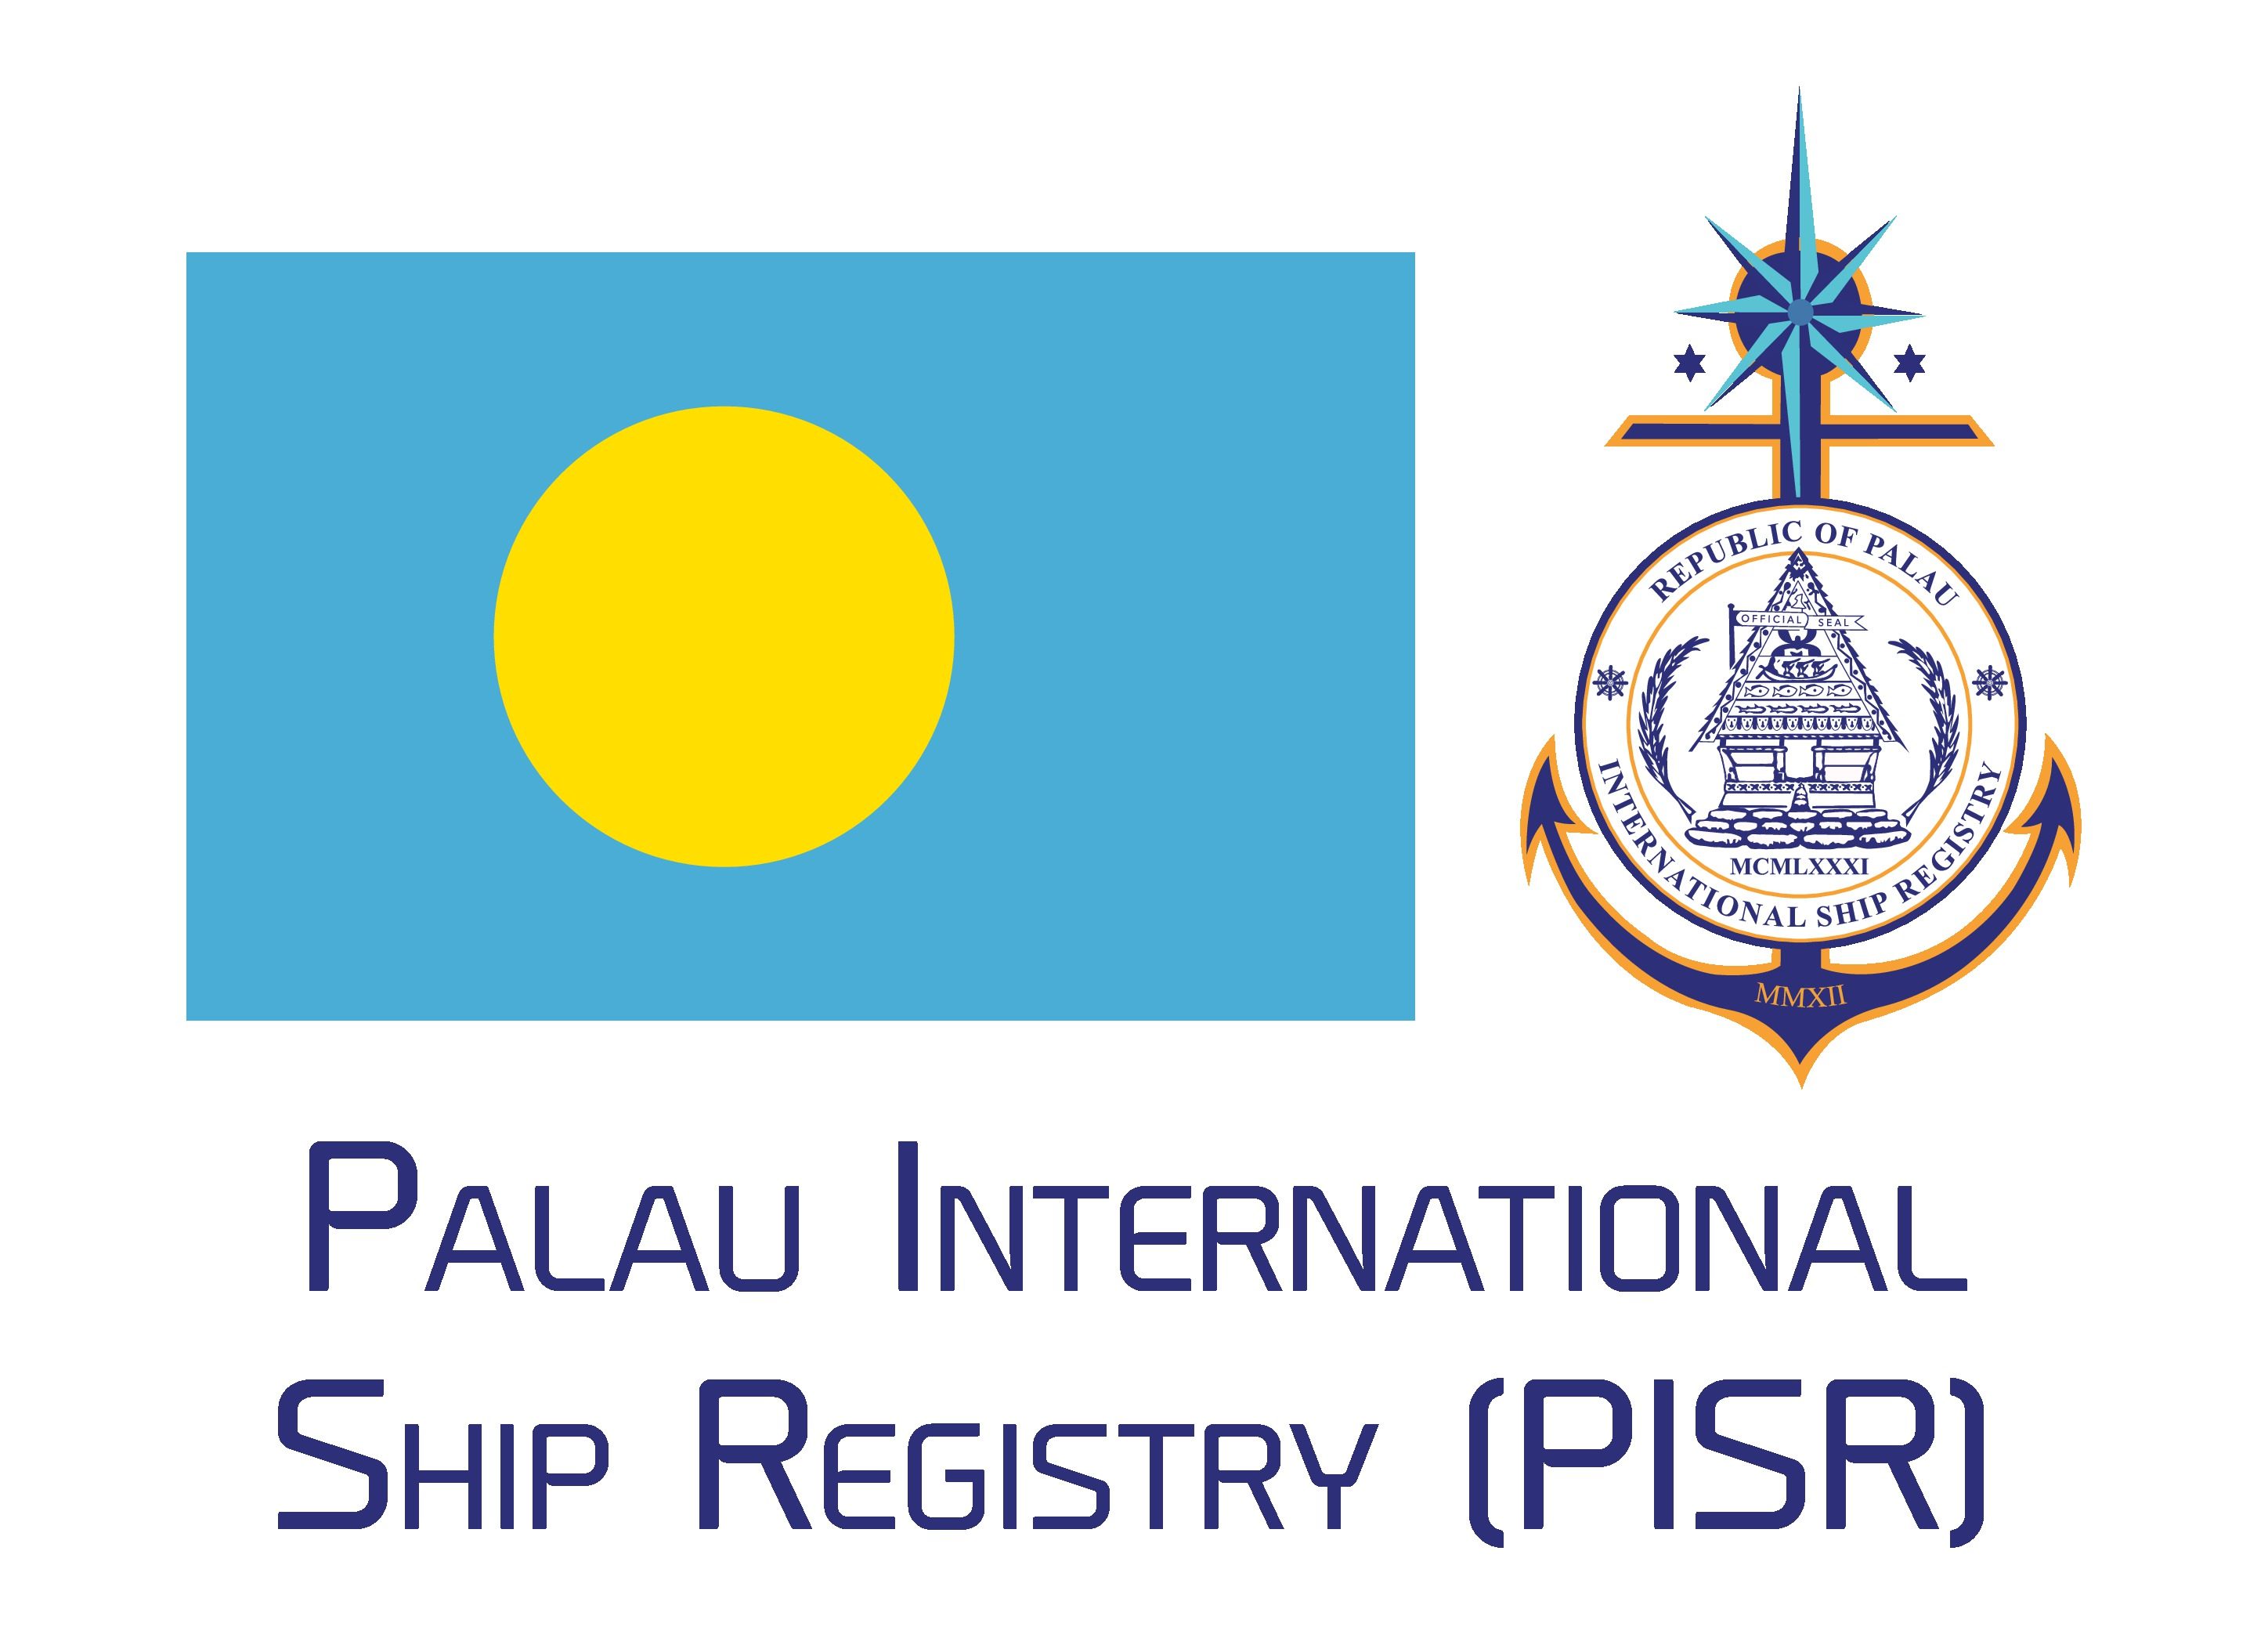 PALAU INTERNATIONAL SHIP REGISTRY (PISR)